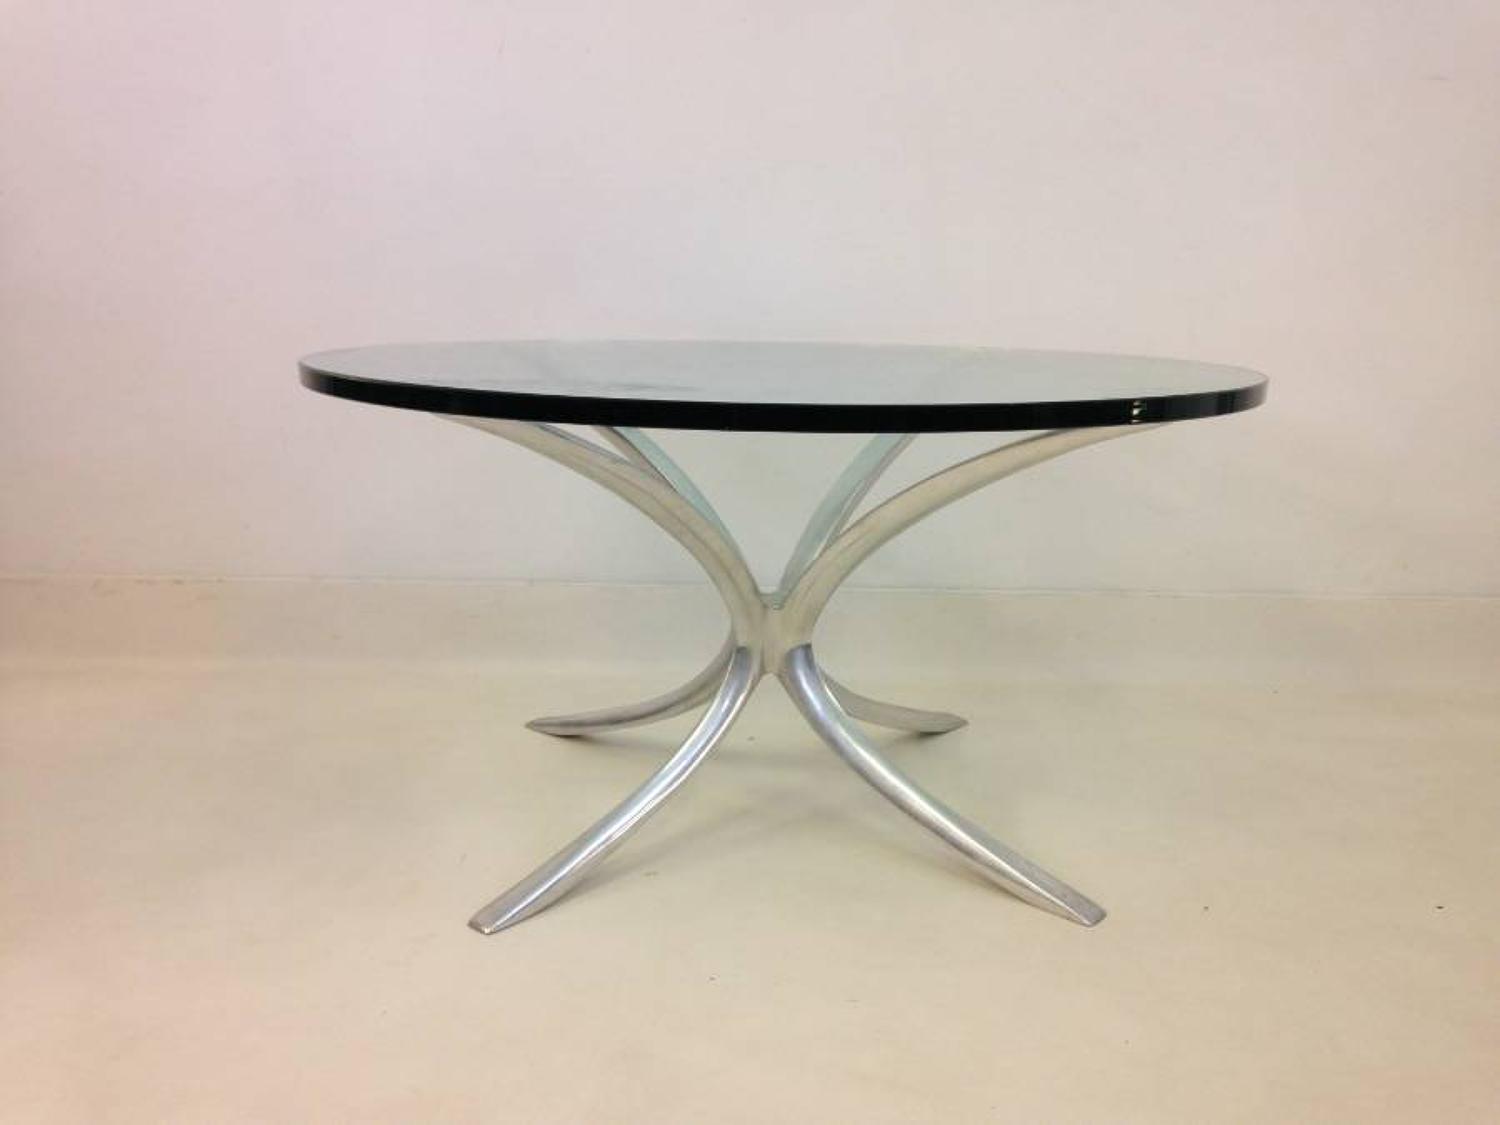 Cast aluminium and glass coffee table